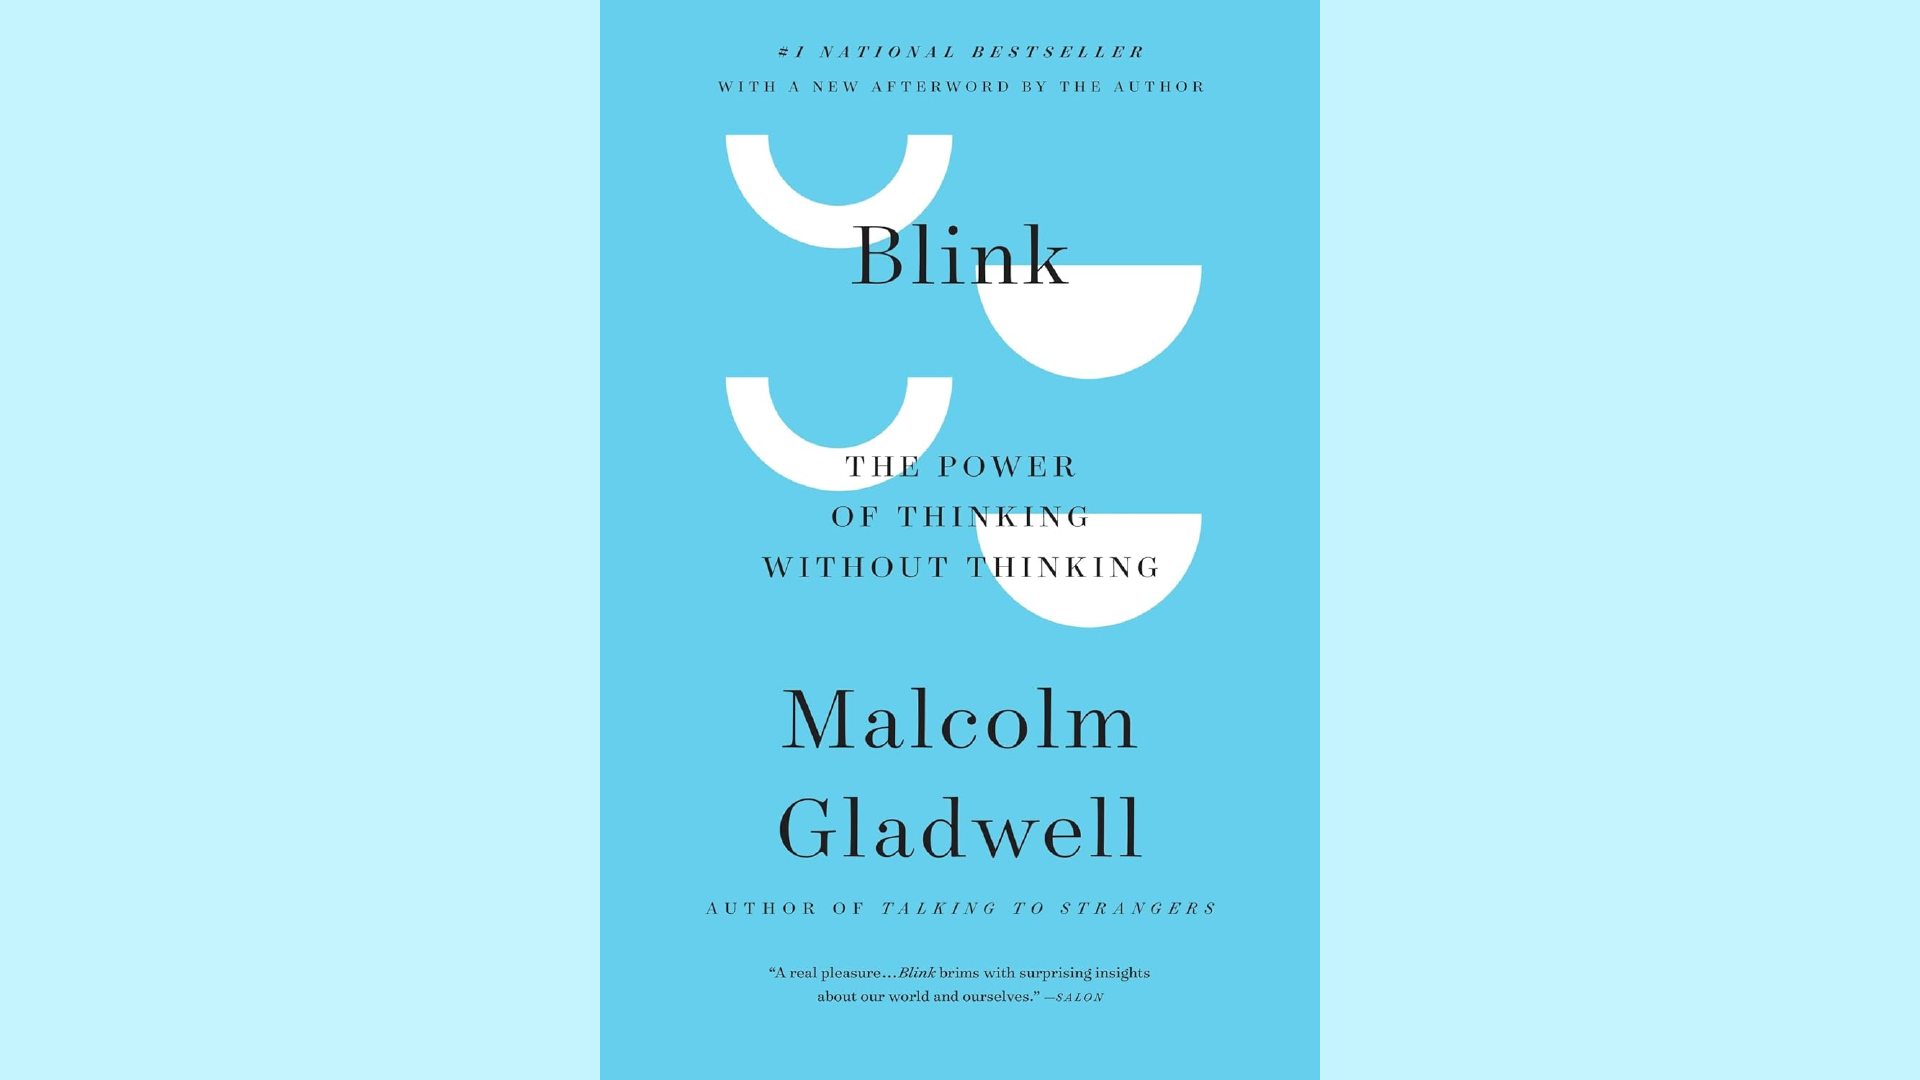 Summary: Blink by Malcolm Gladwell